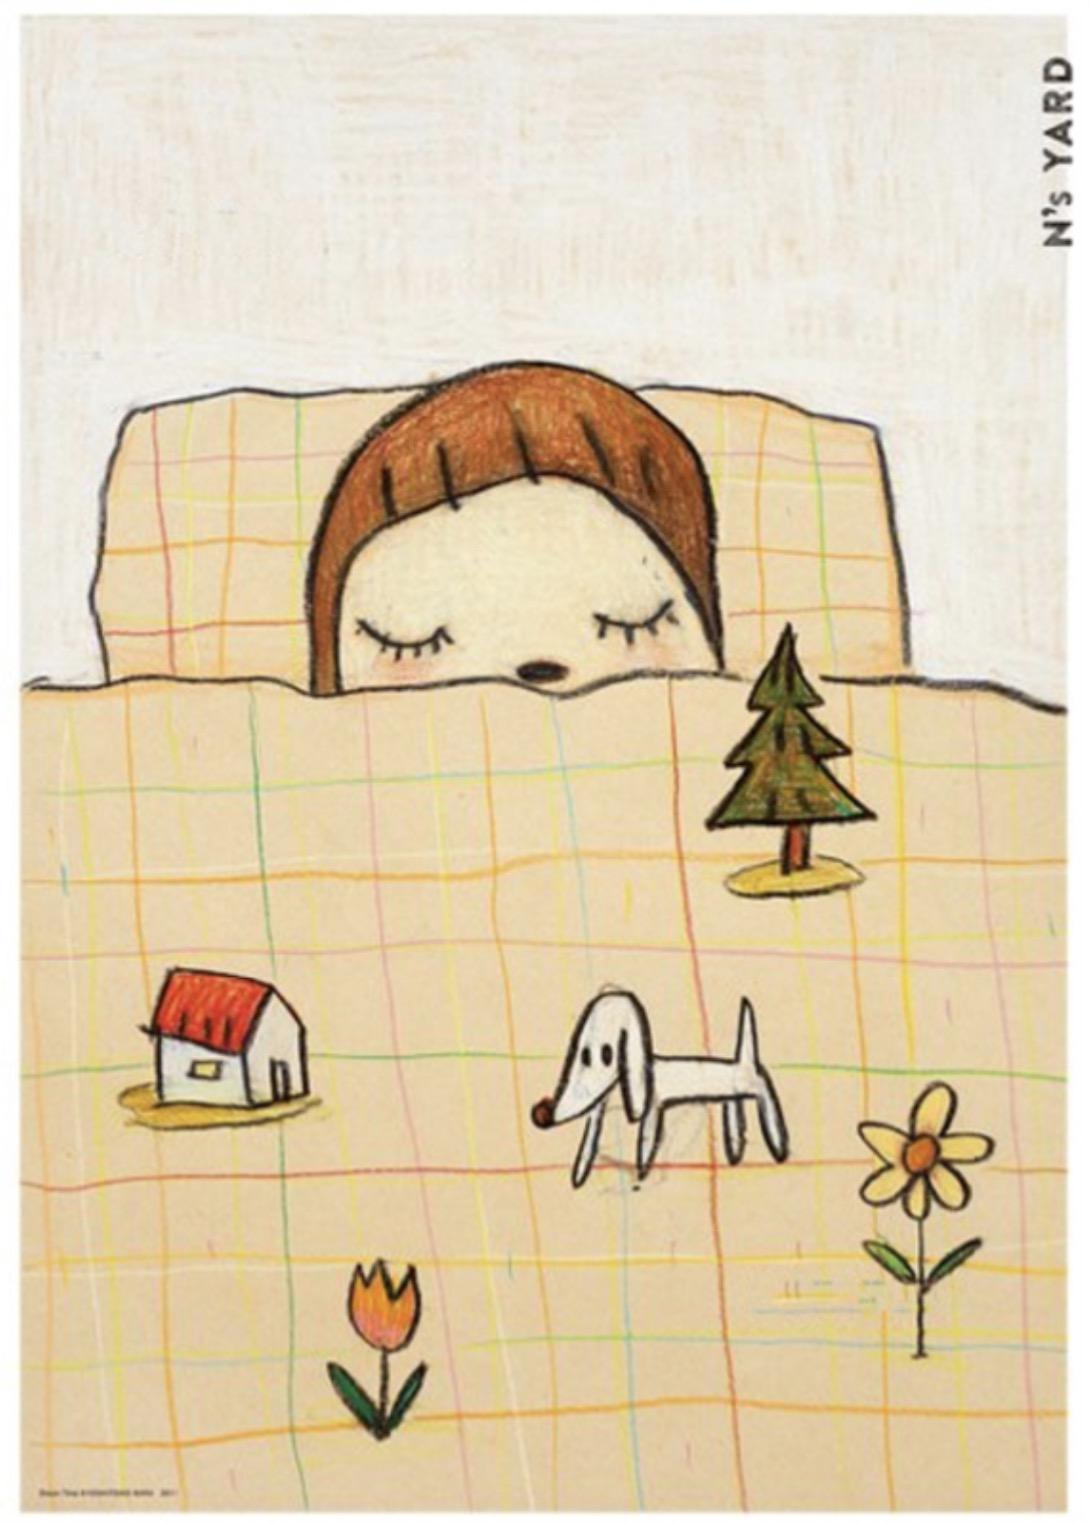 Yoshitomo Nara
Dream Time
Screenprint on paper
20 3/10 × 14 3/10 in  51.5 × 36.4 cm